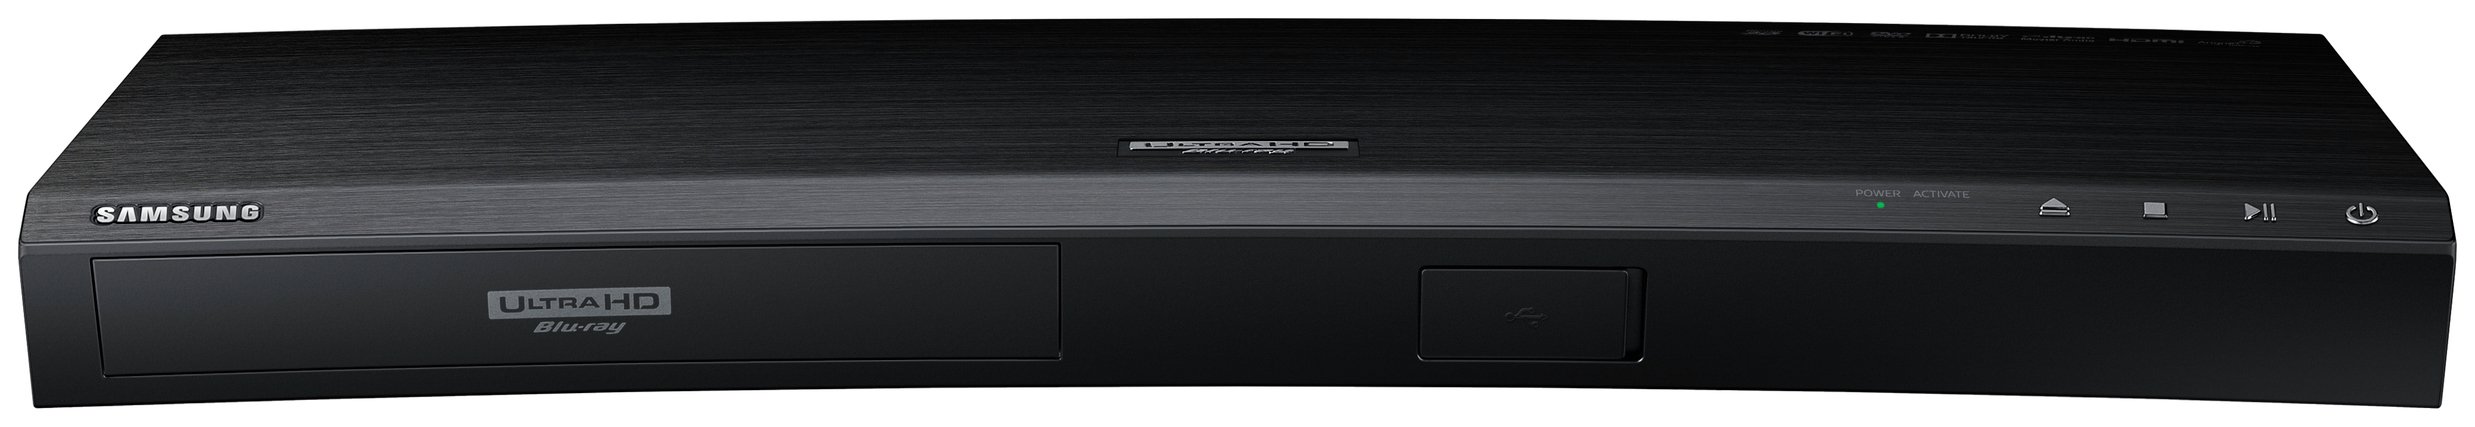 Samsung UBD M9000 4K UHD Smart Blu-ray Player